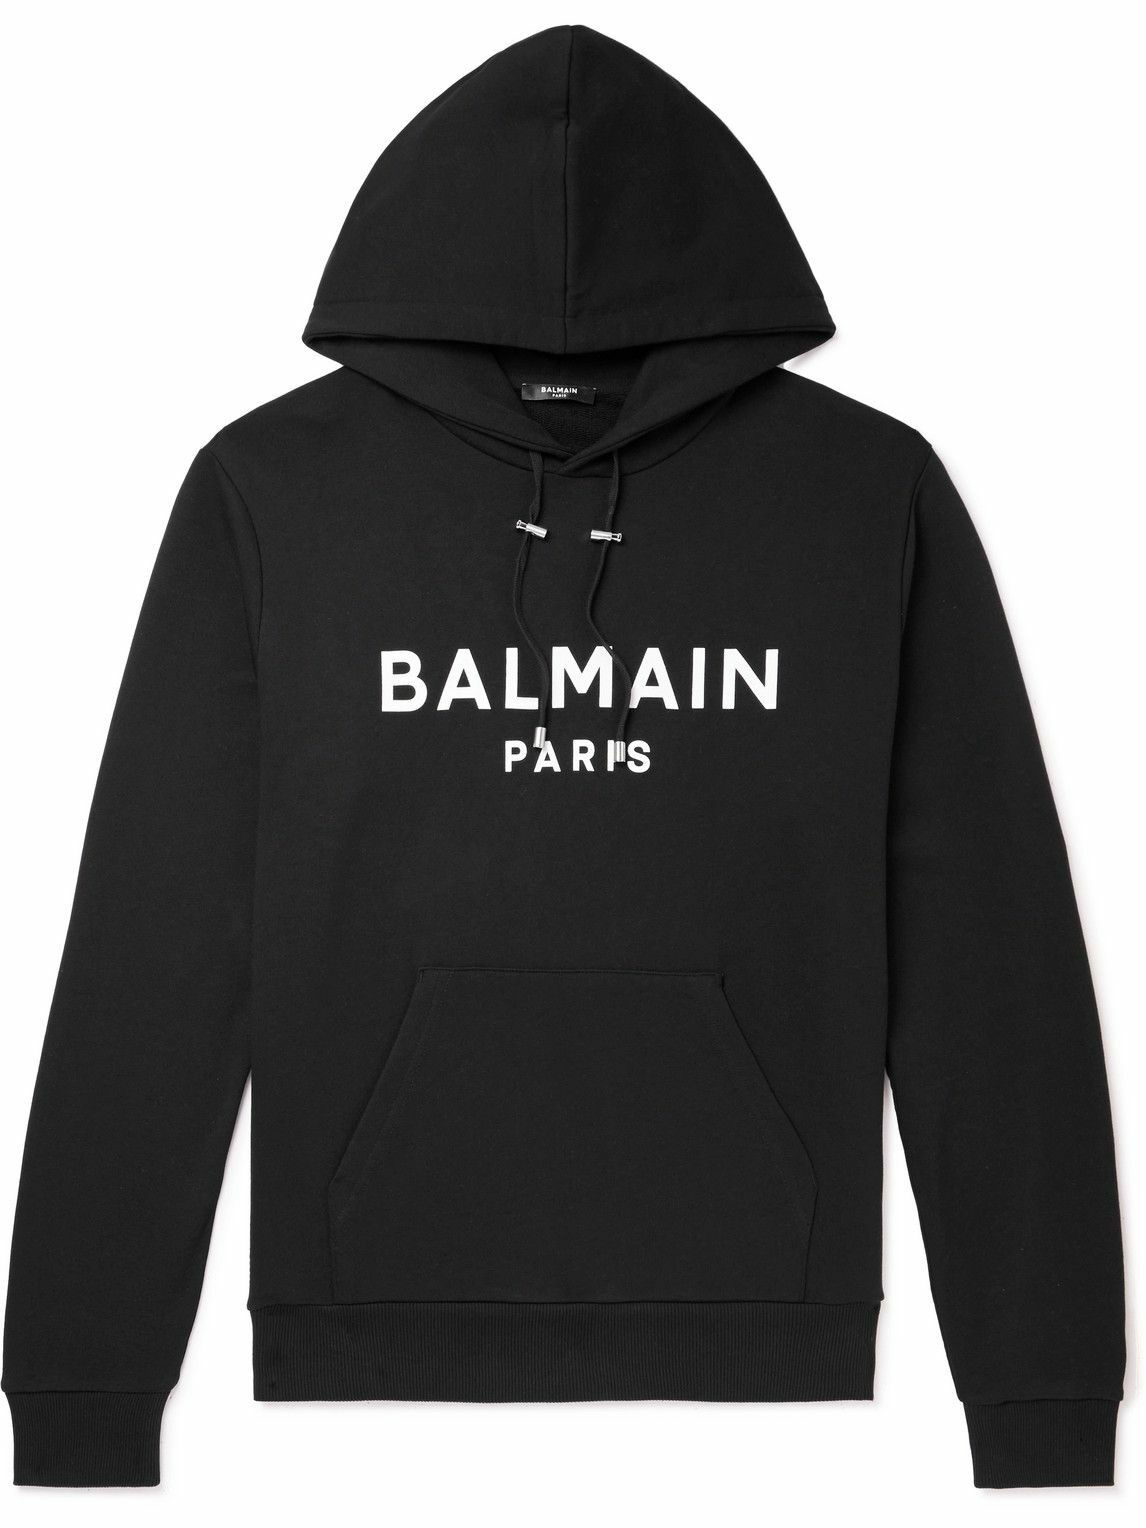 Balmain - Logo-Print Cotton-Jersey Hoodie - Black Balmain